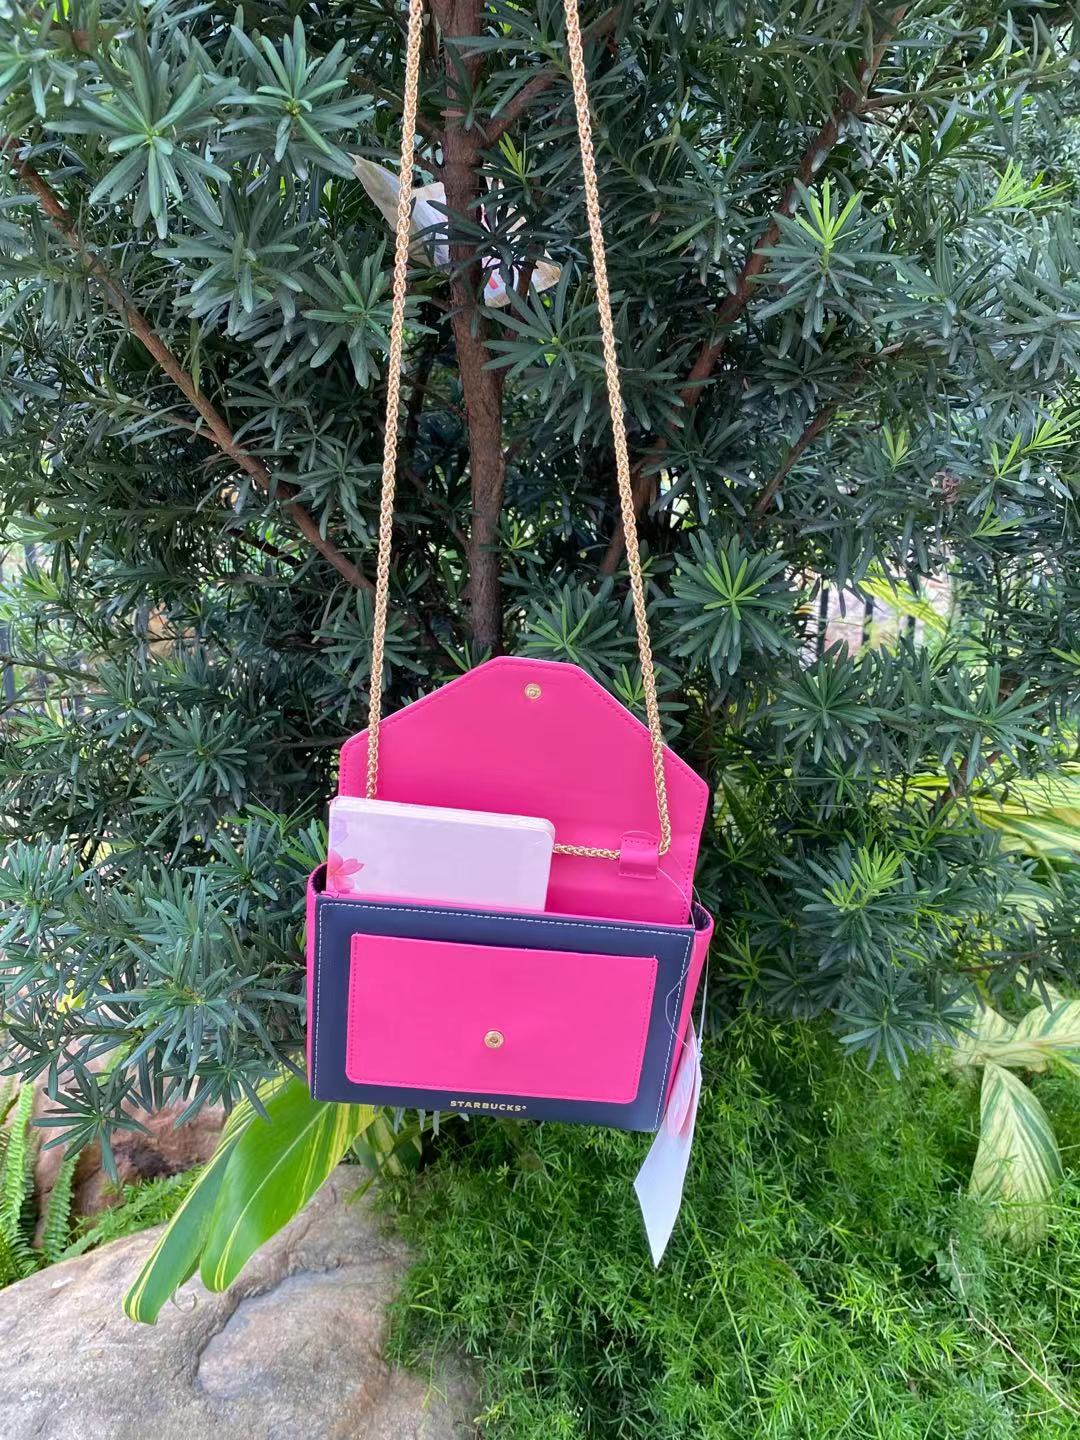 Starbucks Notebook Shining Pink Cherry Blossom Notepad Bag Purse